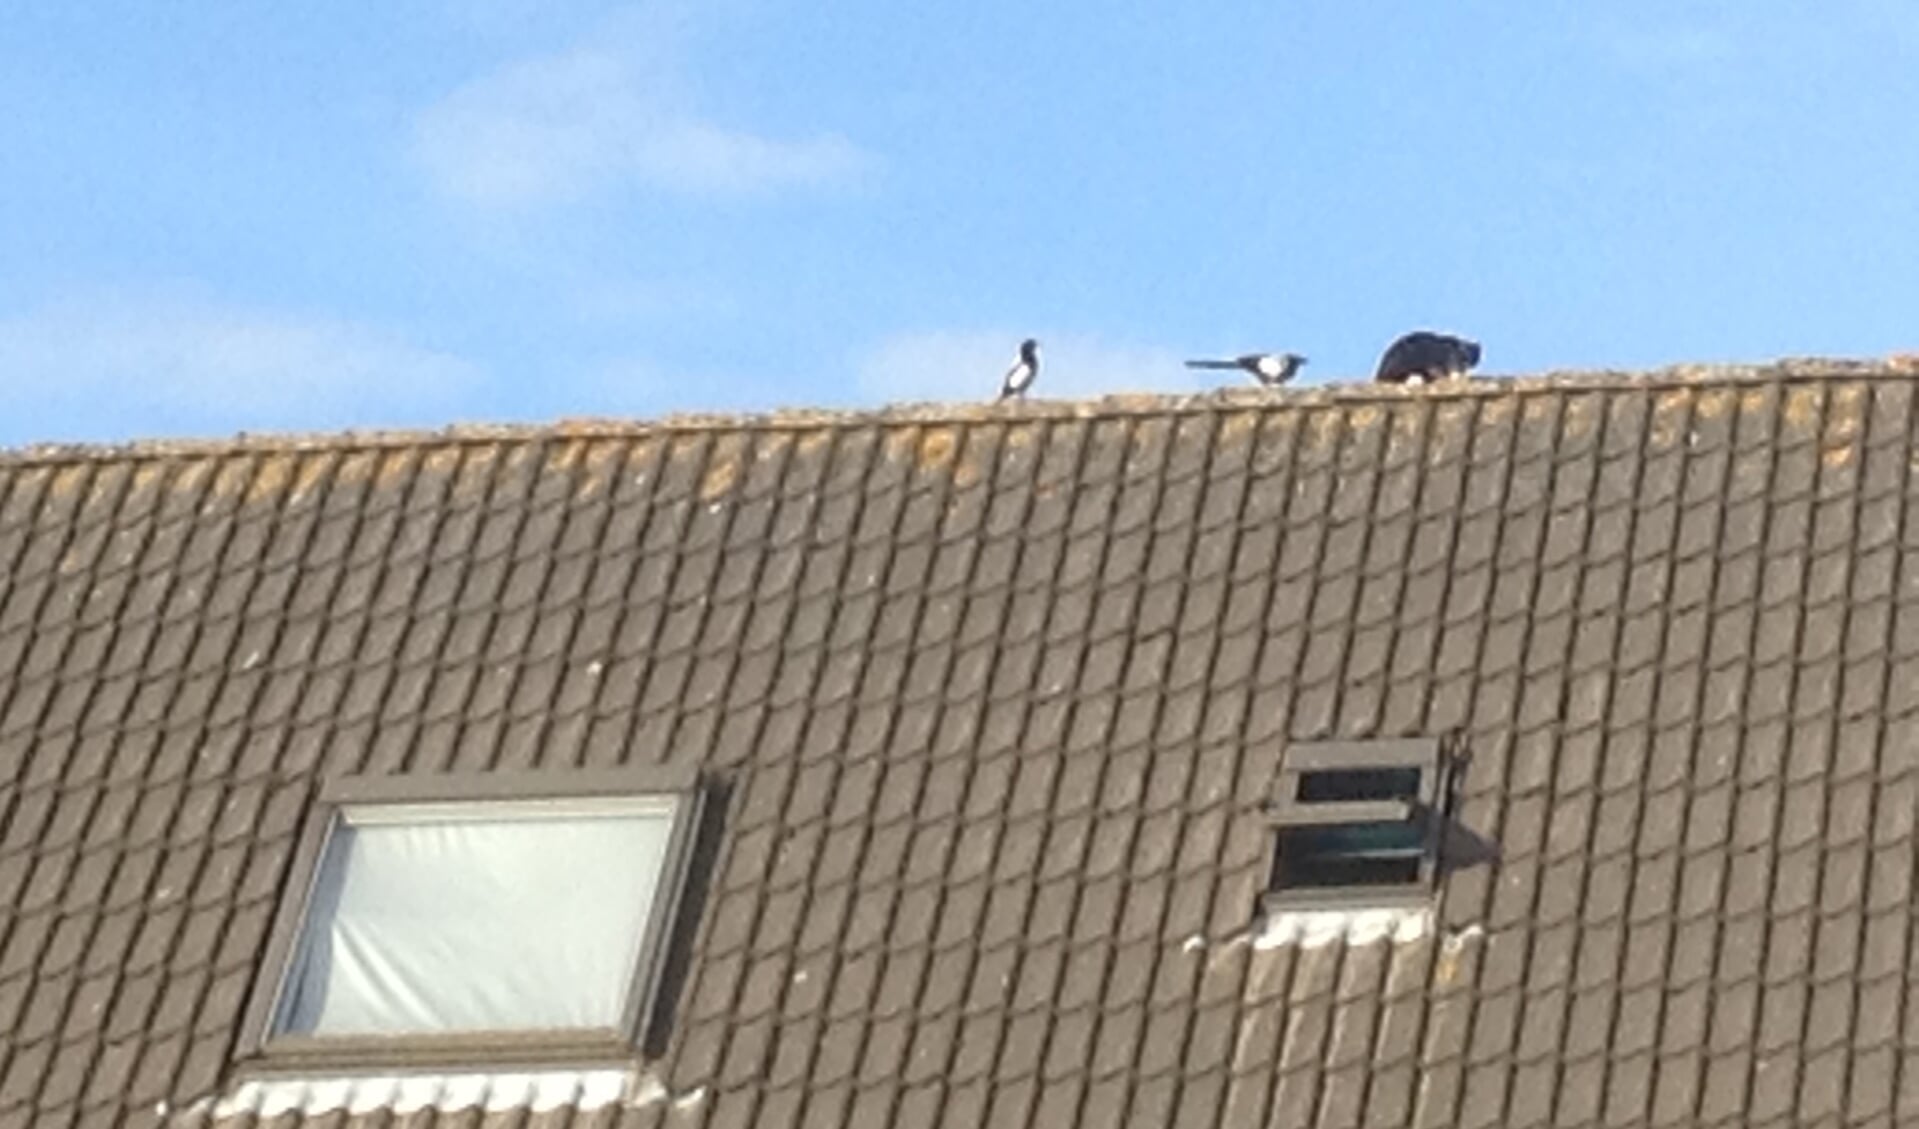 Kat op dak en 2 eksters